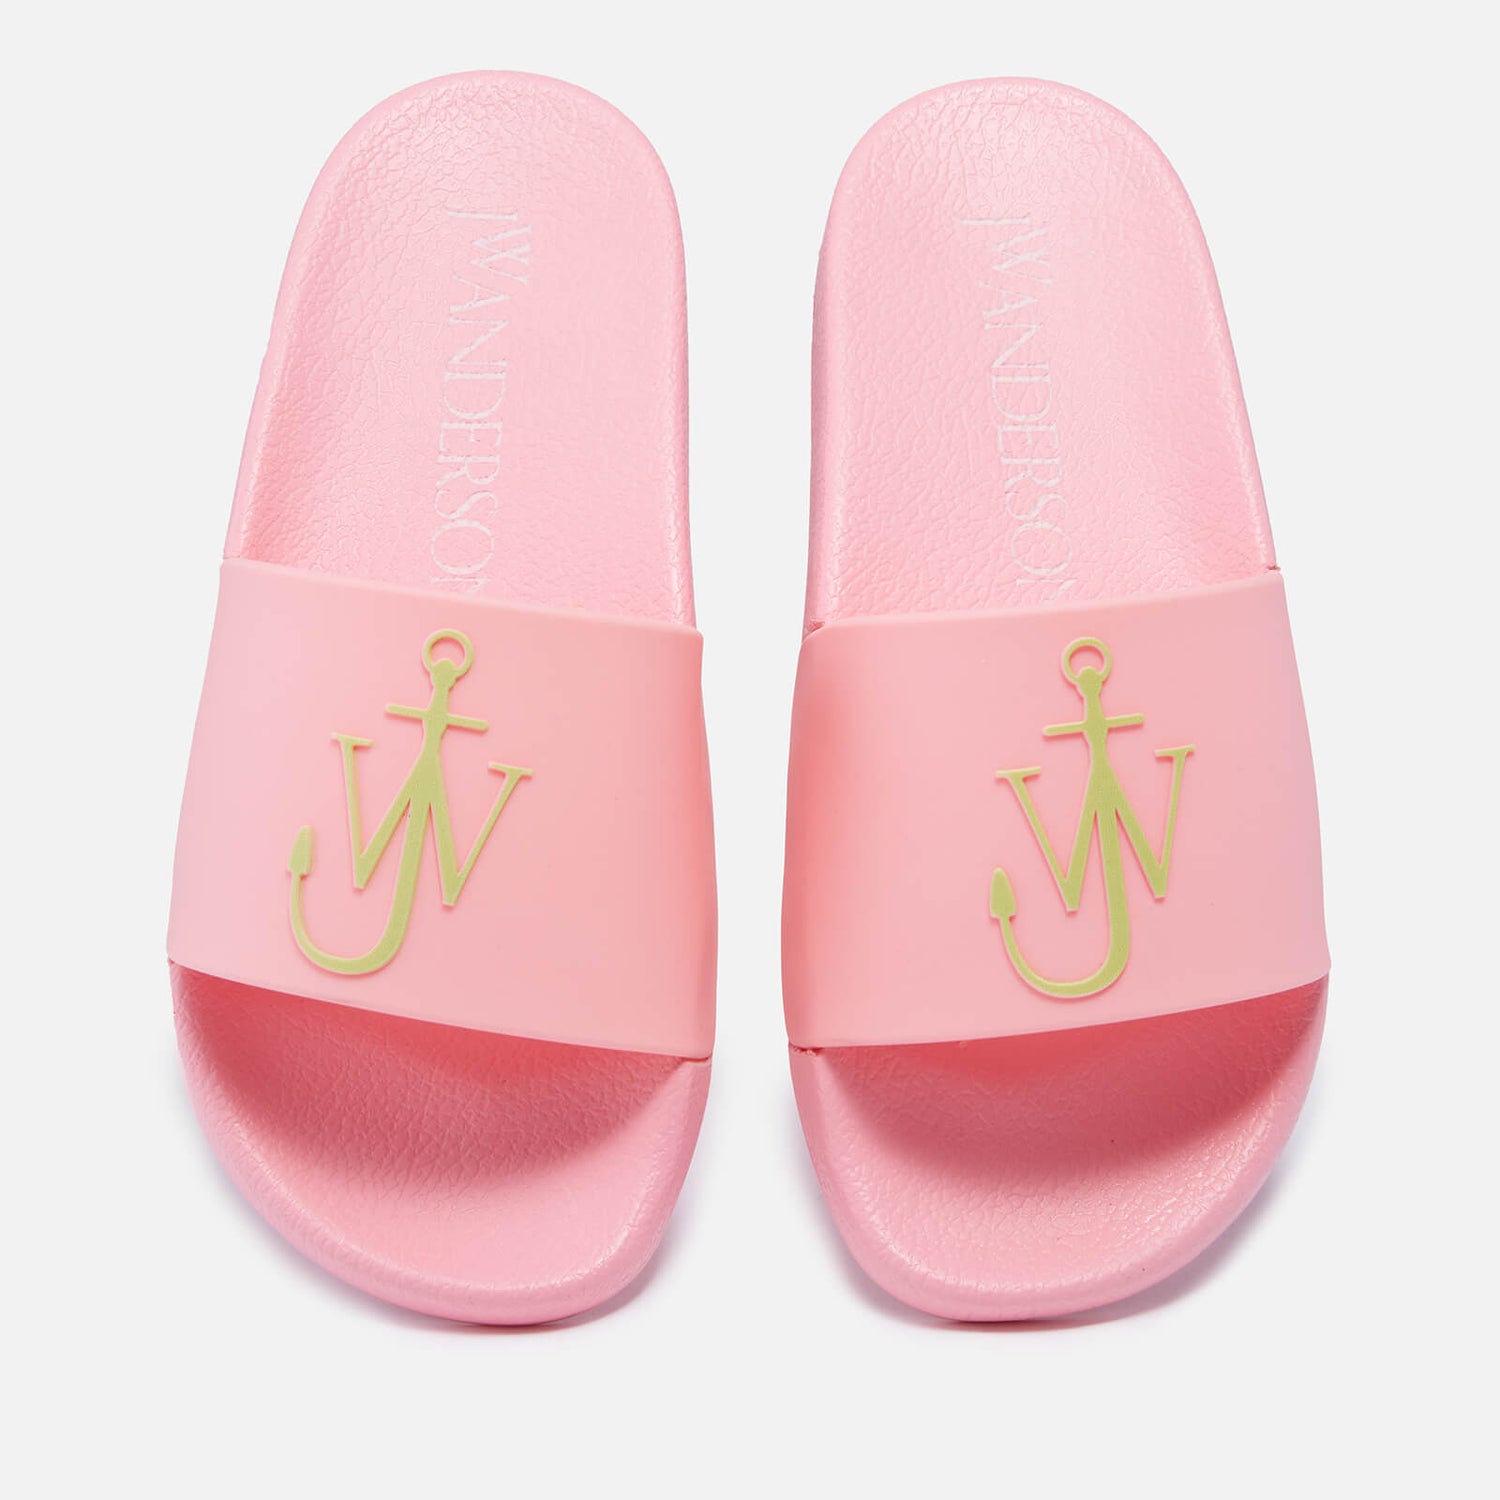 JW Anderson Women's Logo Pool Slide Sandals - Pink - UK 3